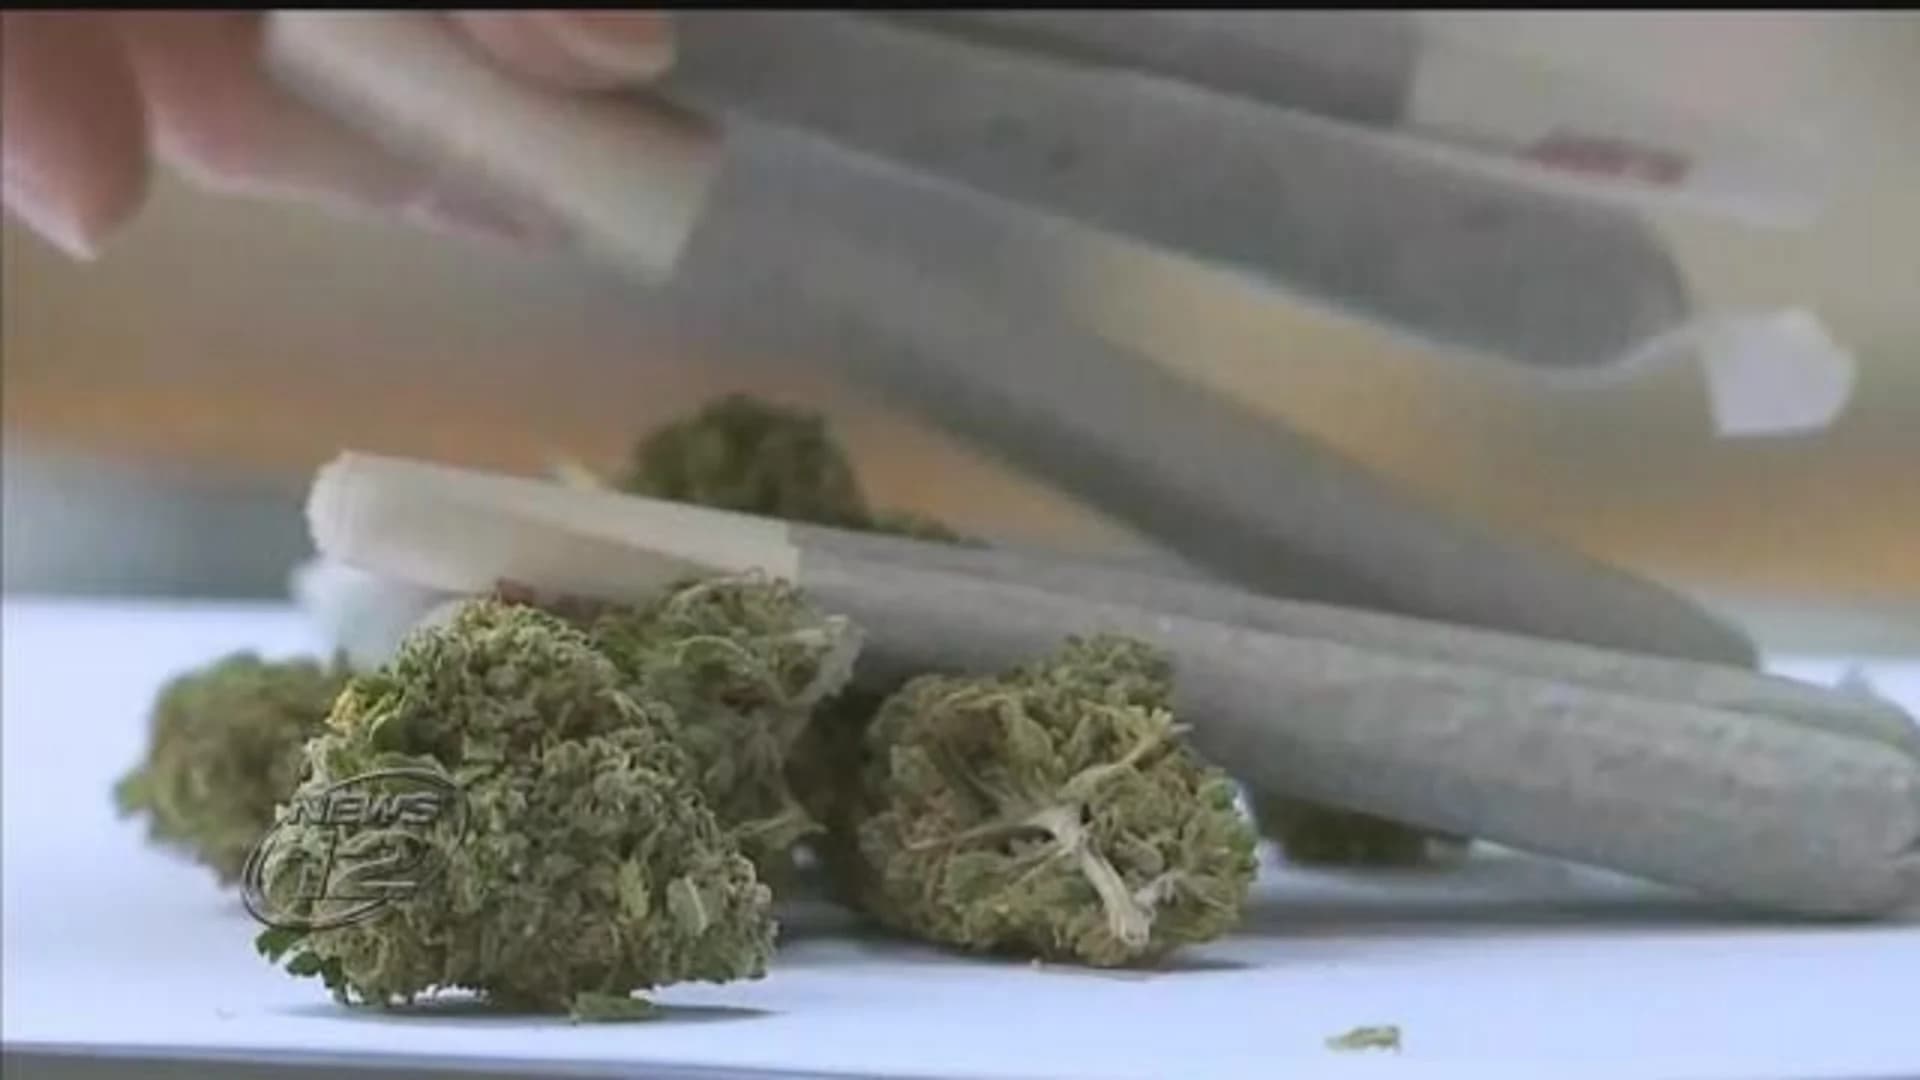 State hosts meeting on LI to discuss legalization of marijuana